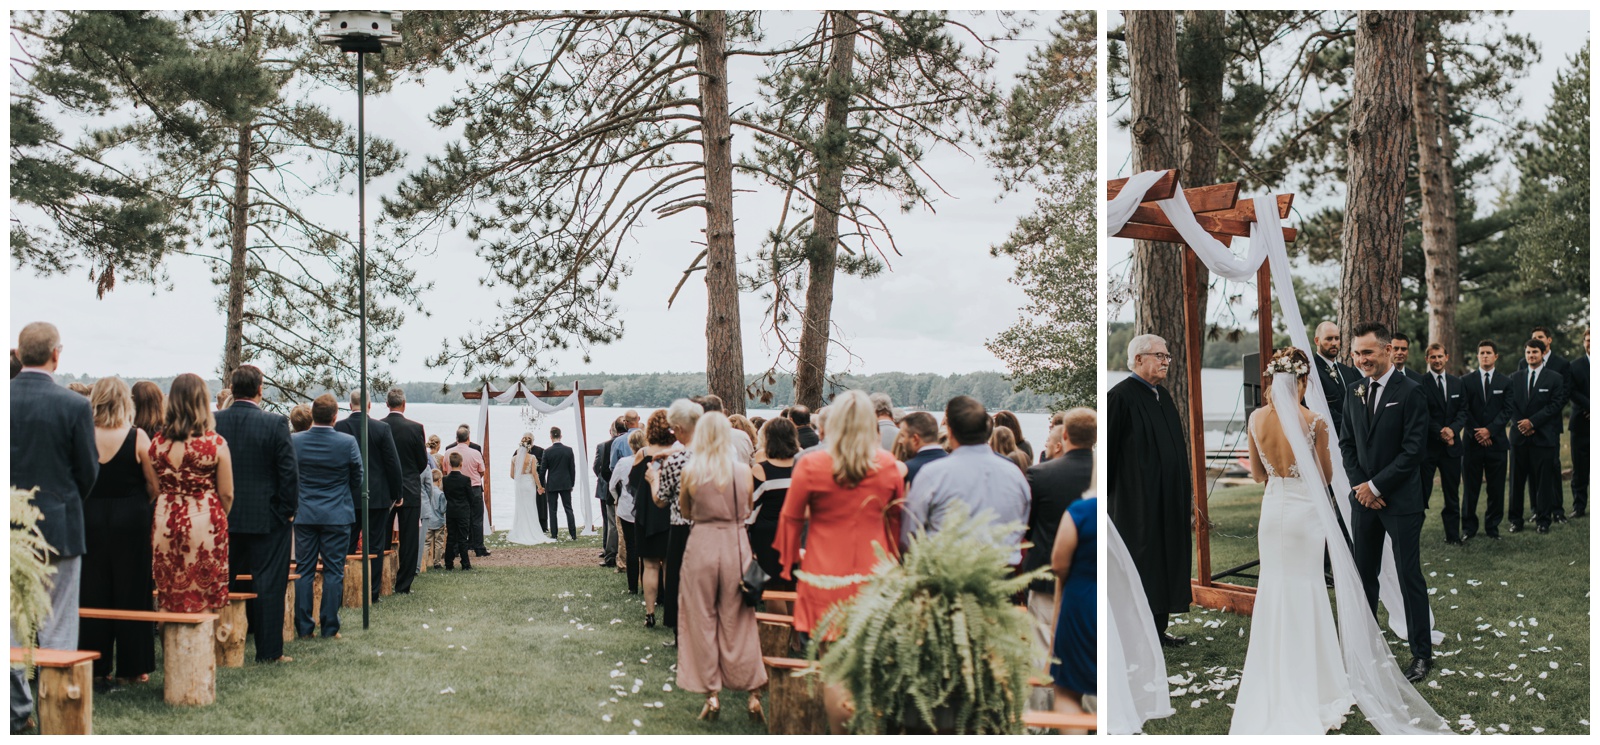 Ashley + Charles // A Northern Wisconsin Wedding